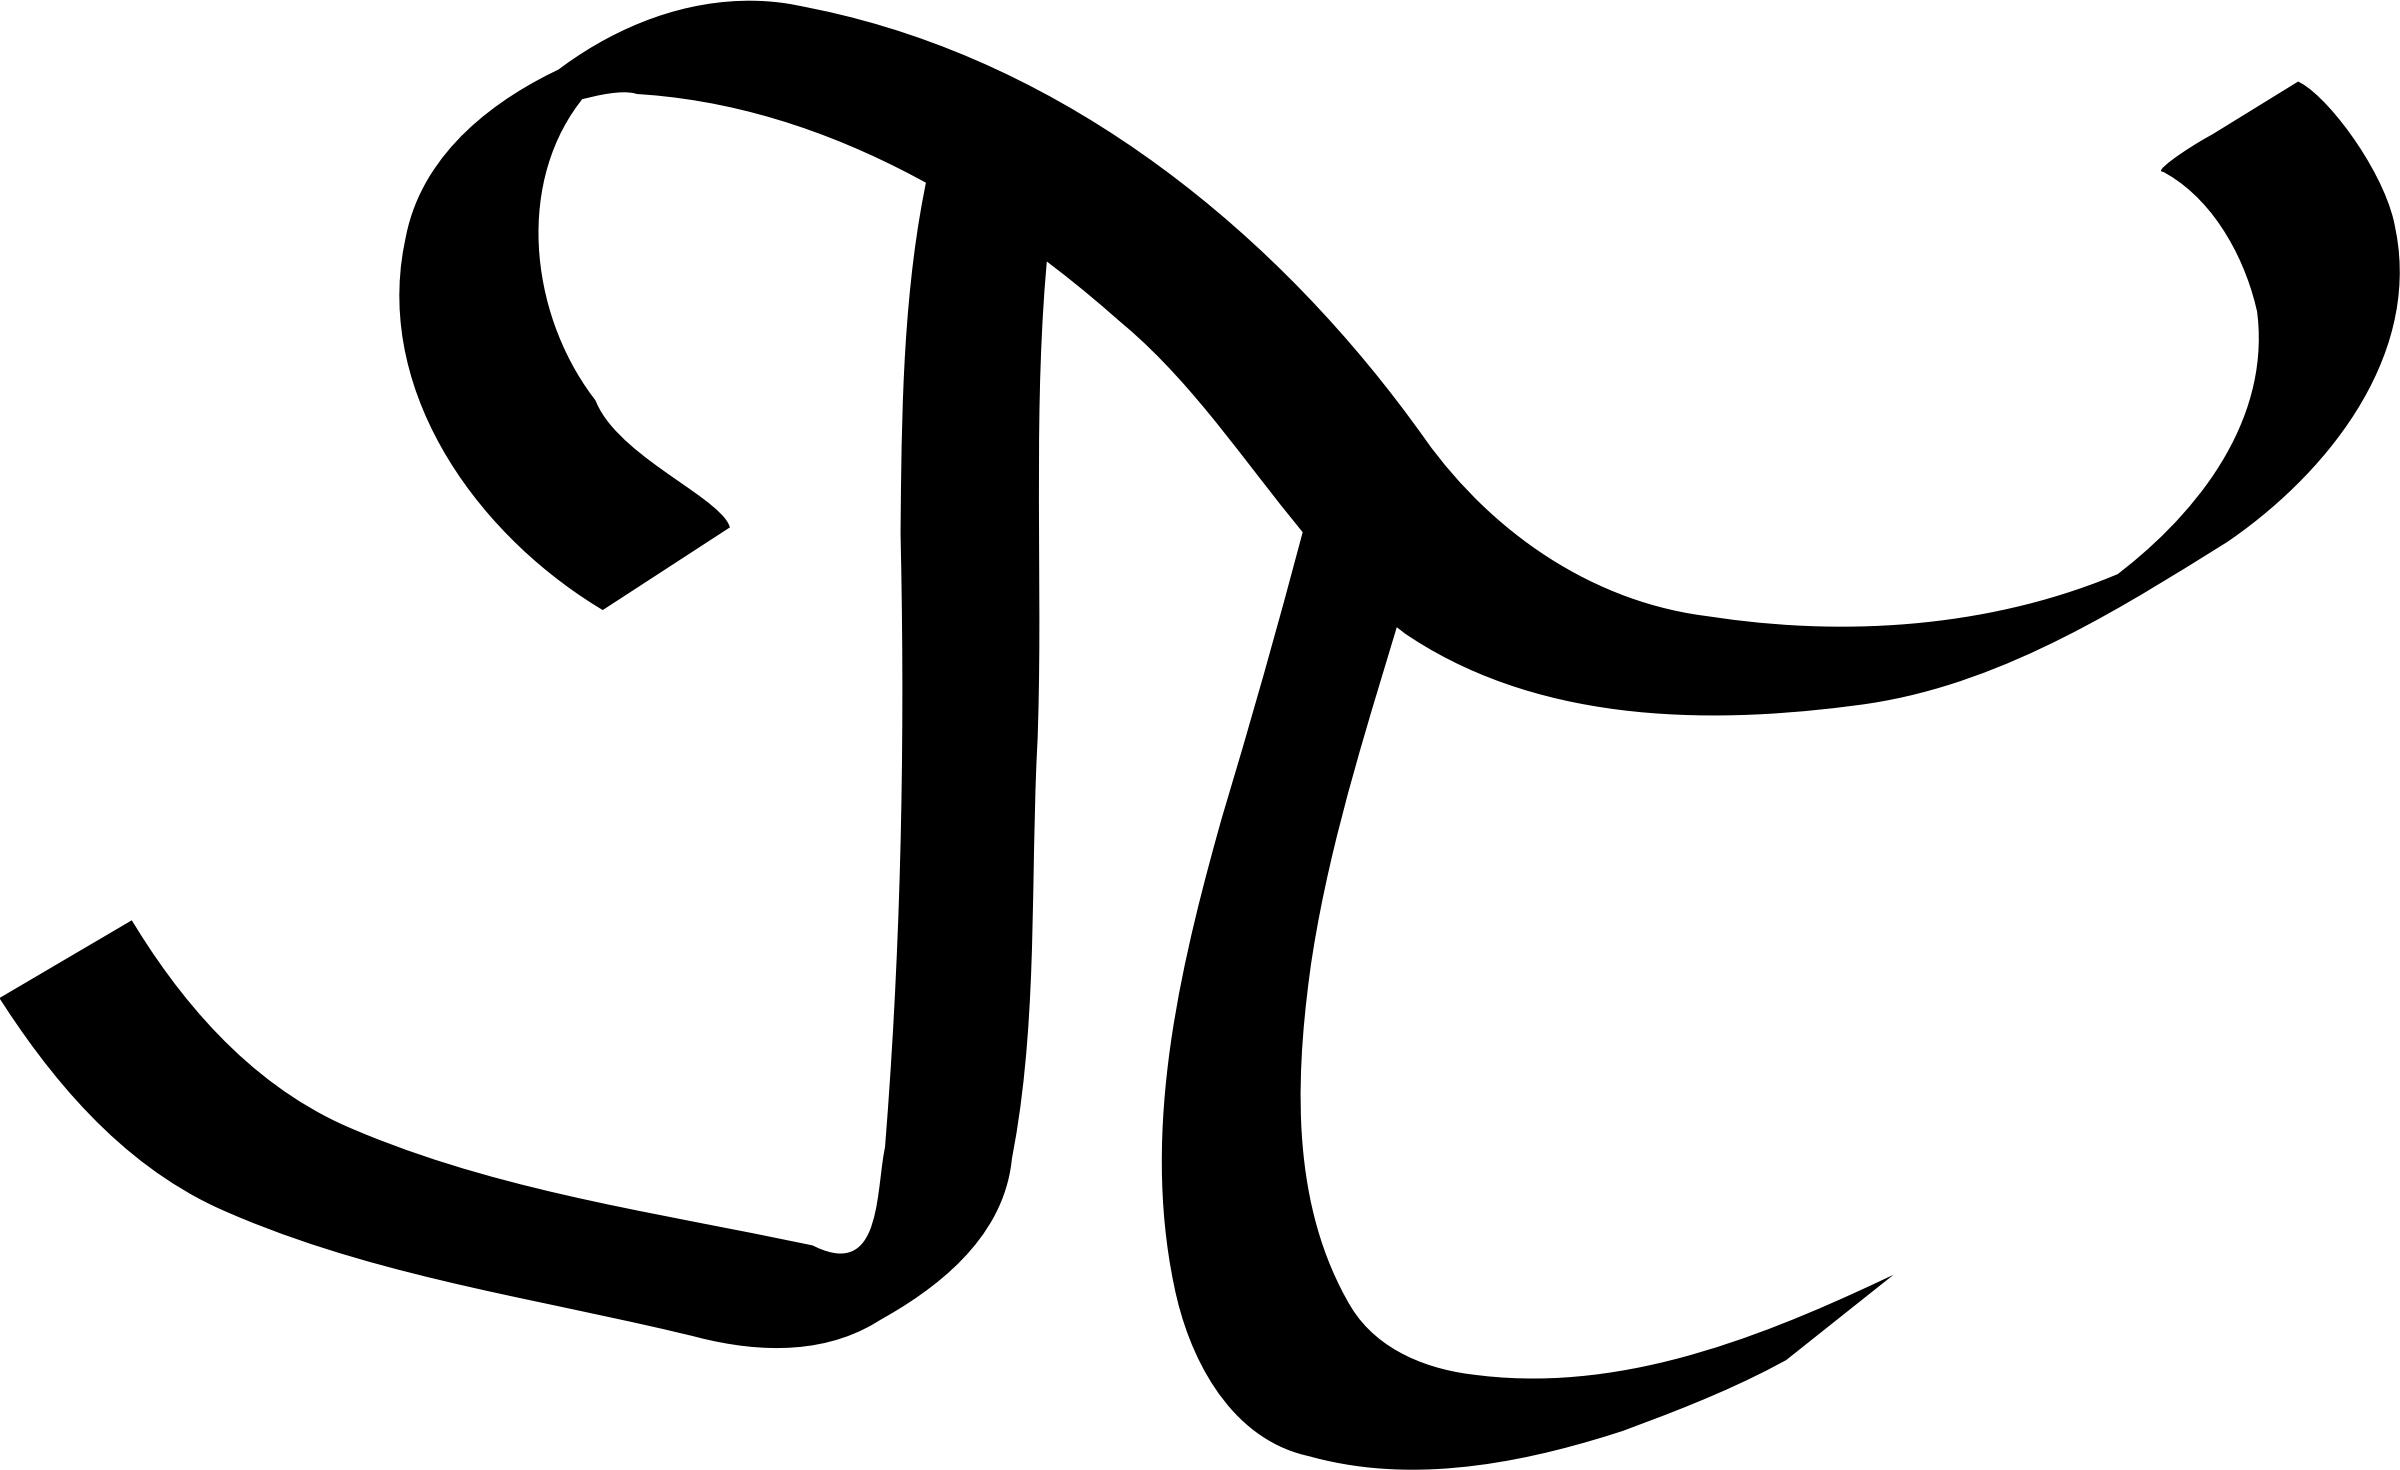 Greek Letter pi icons